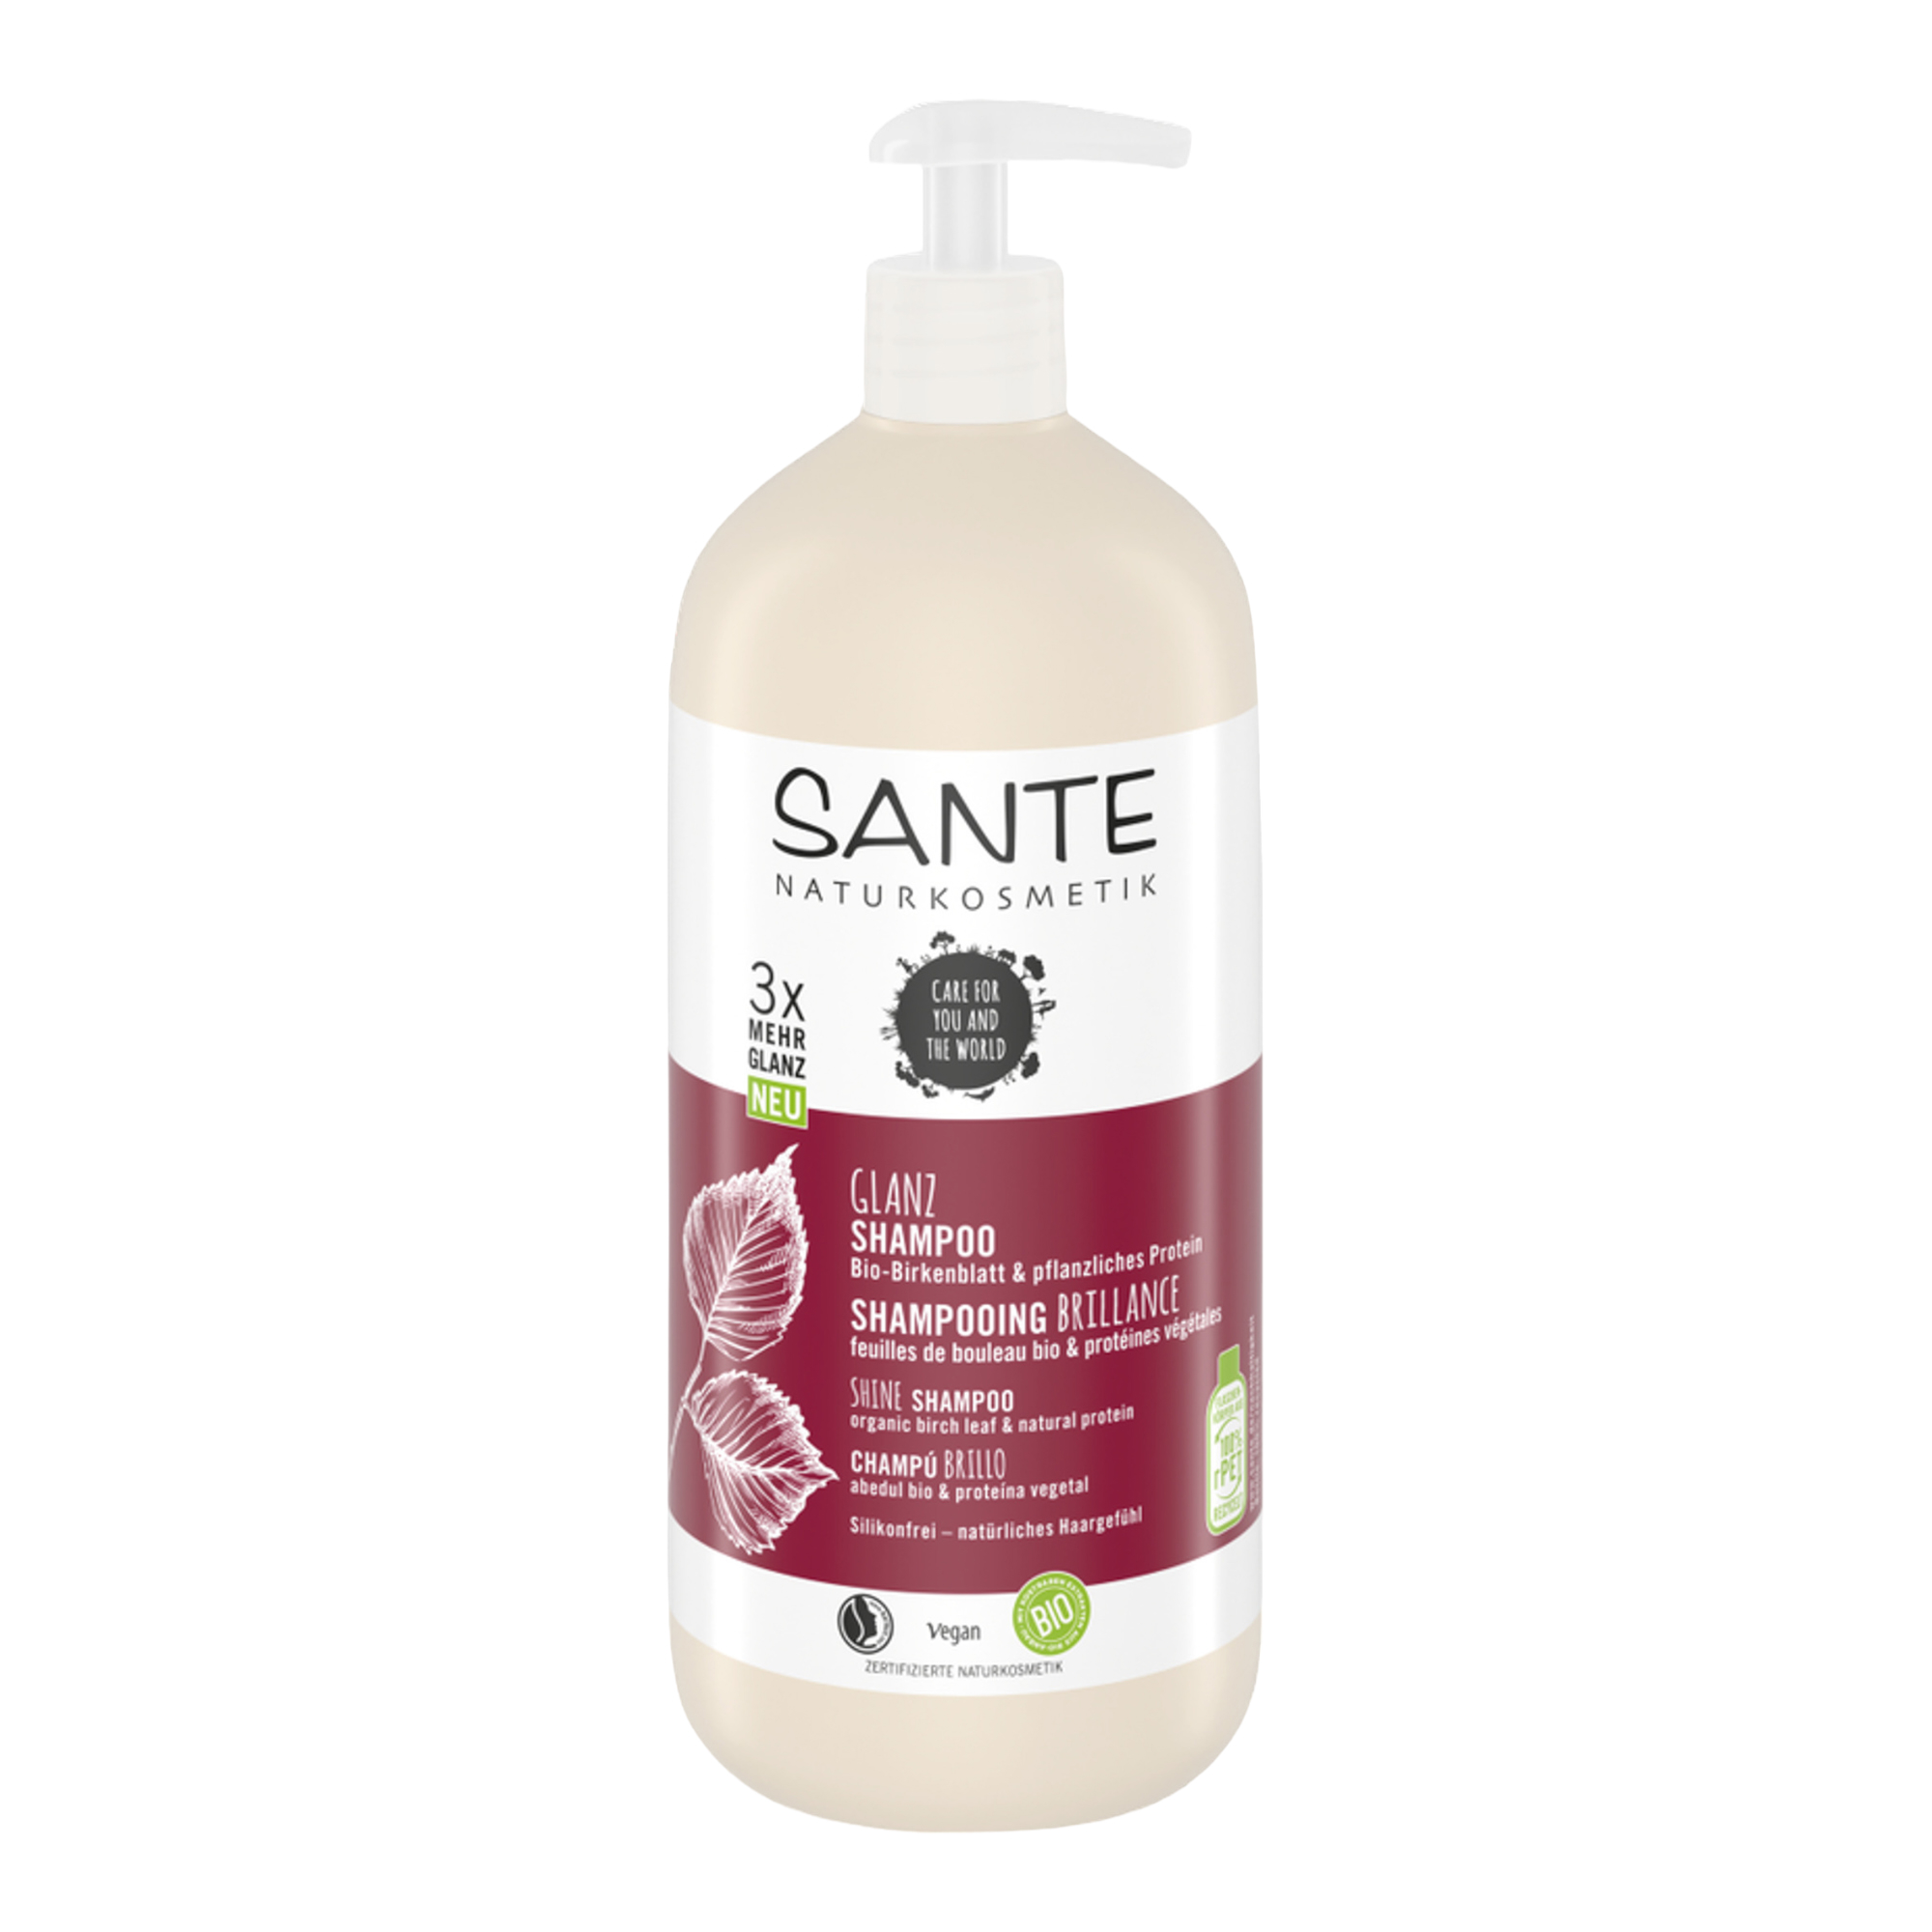 Organic shine shampoo 500ml from Sante Natural Cosmetics